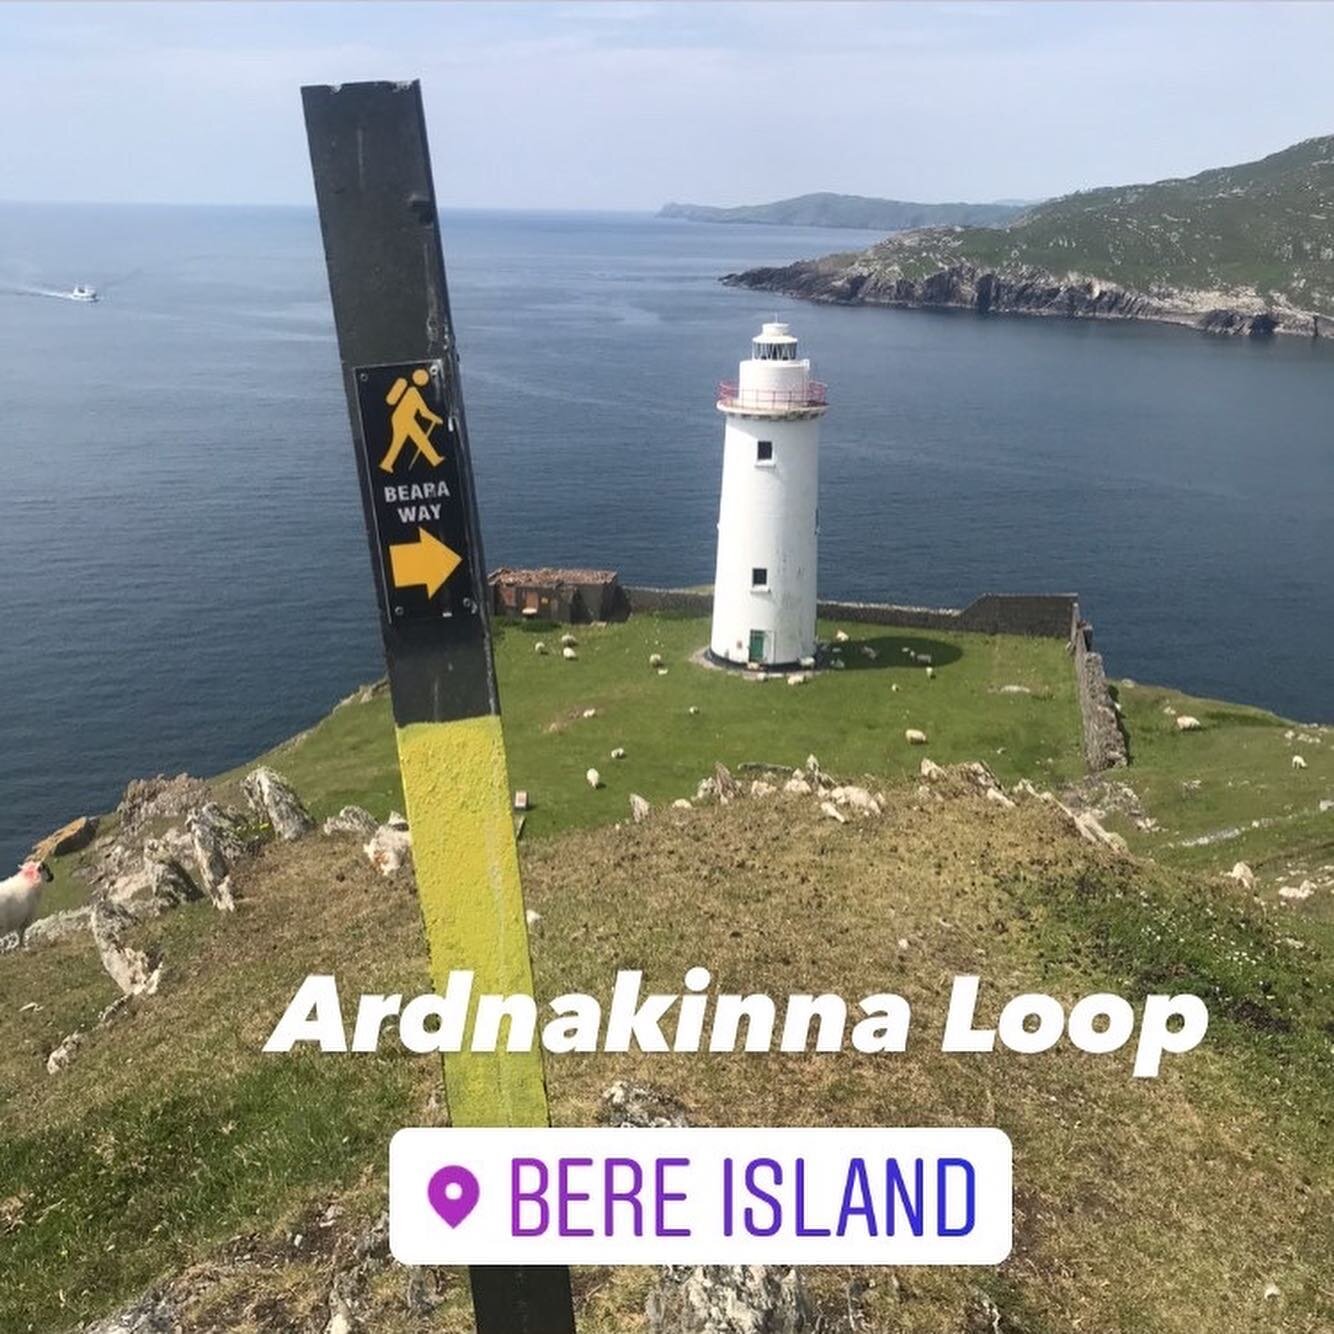 Trip to Bere Island today, stunning walk &amp; weather @bereislandferries #bearapeninsula #castletownbere #bearaway #ringofbeara #westcork #staycation #selfcatering